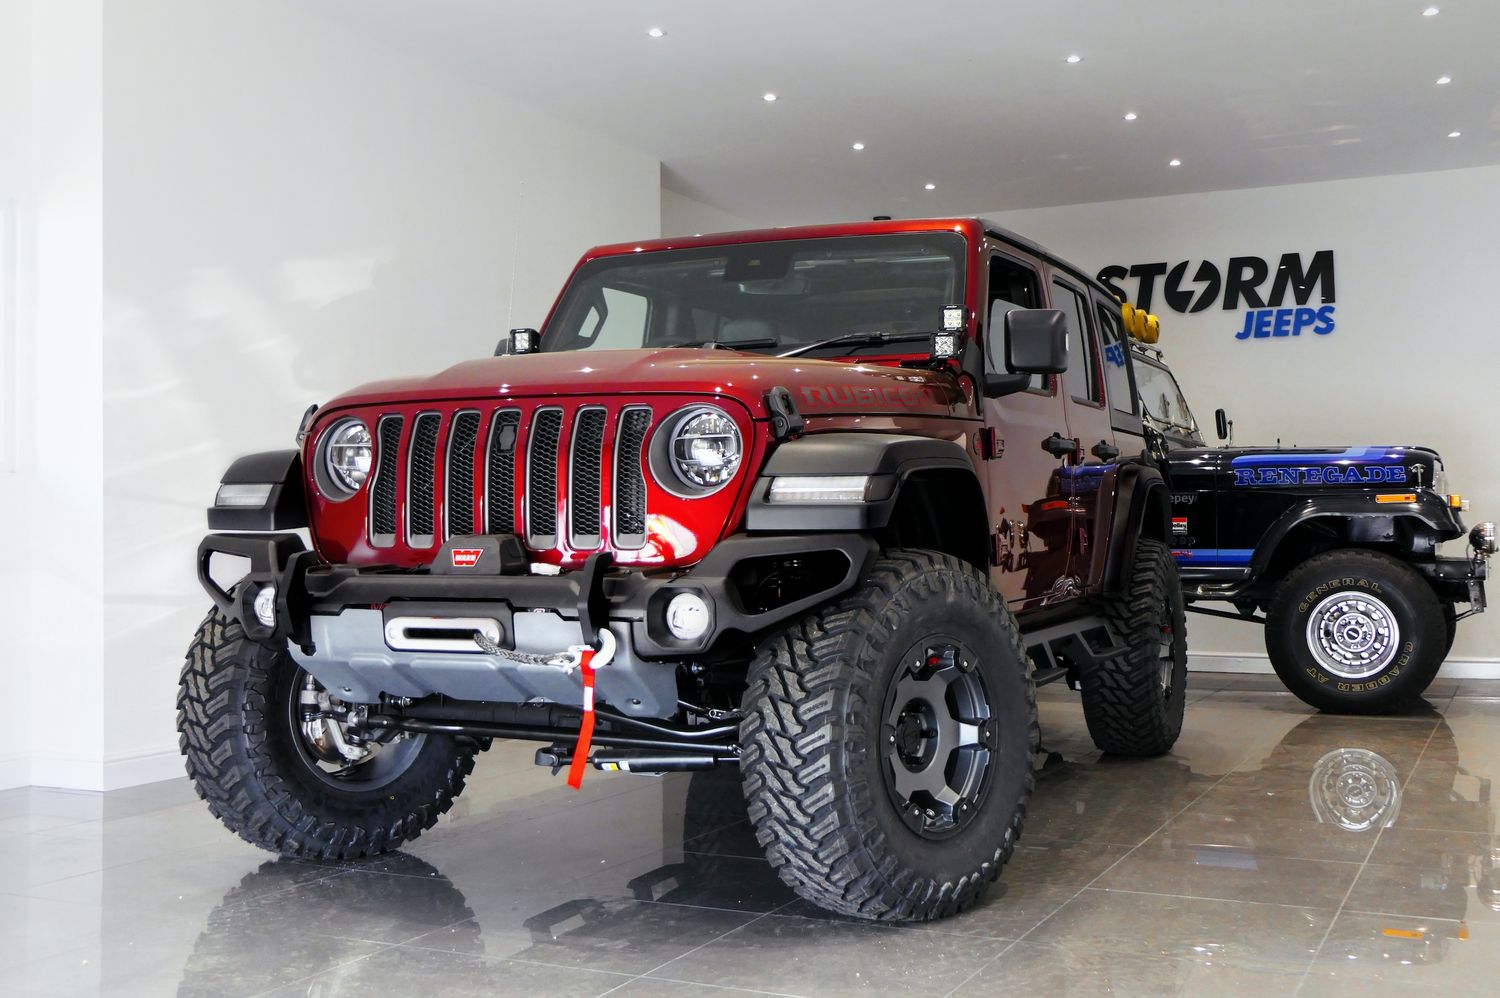 STORM-50, 2021 Snazzberry Red Jeep Wrangler JL Rubicon 4 Door  |  Showcase | Storm Jeeps